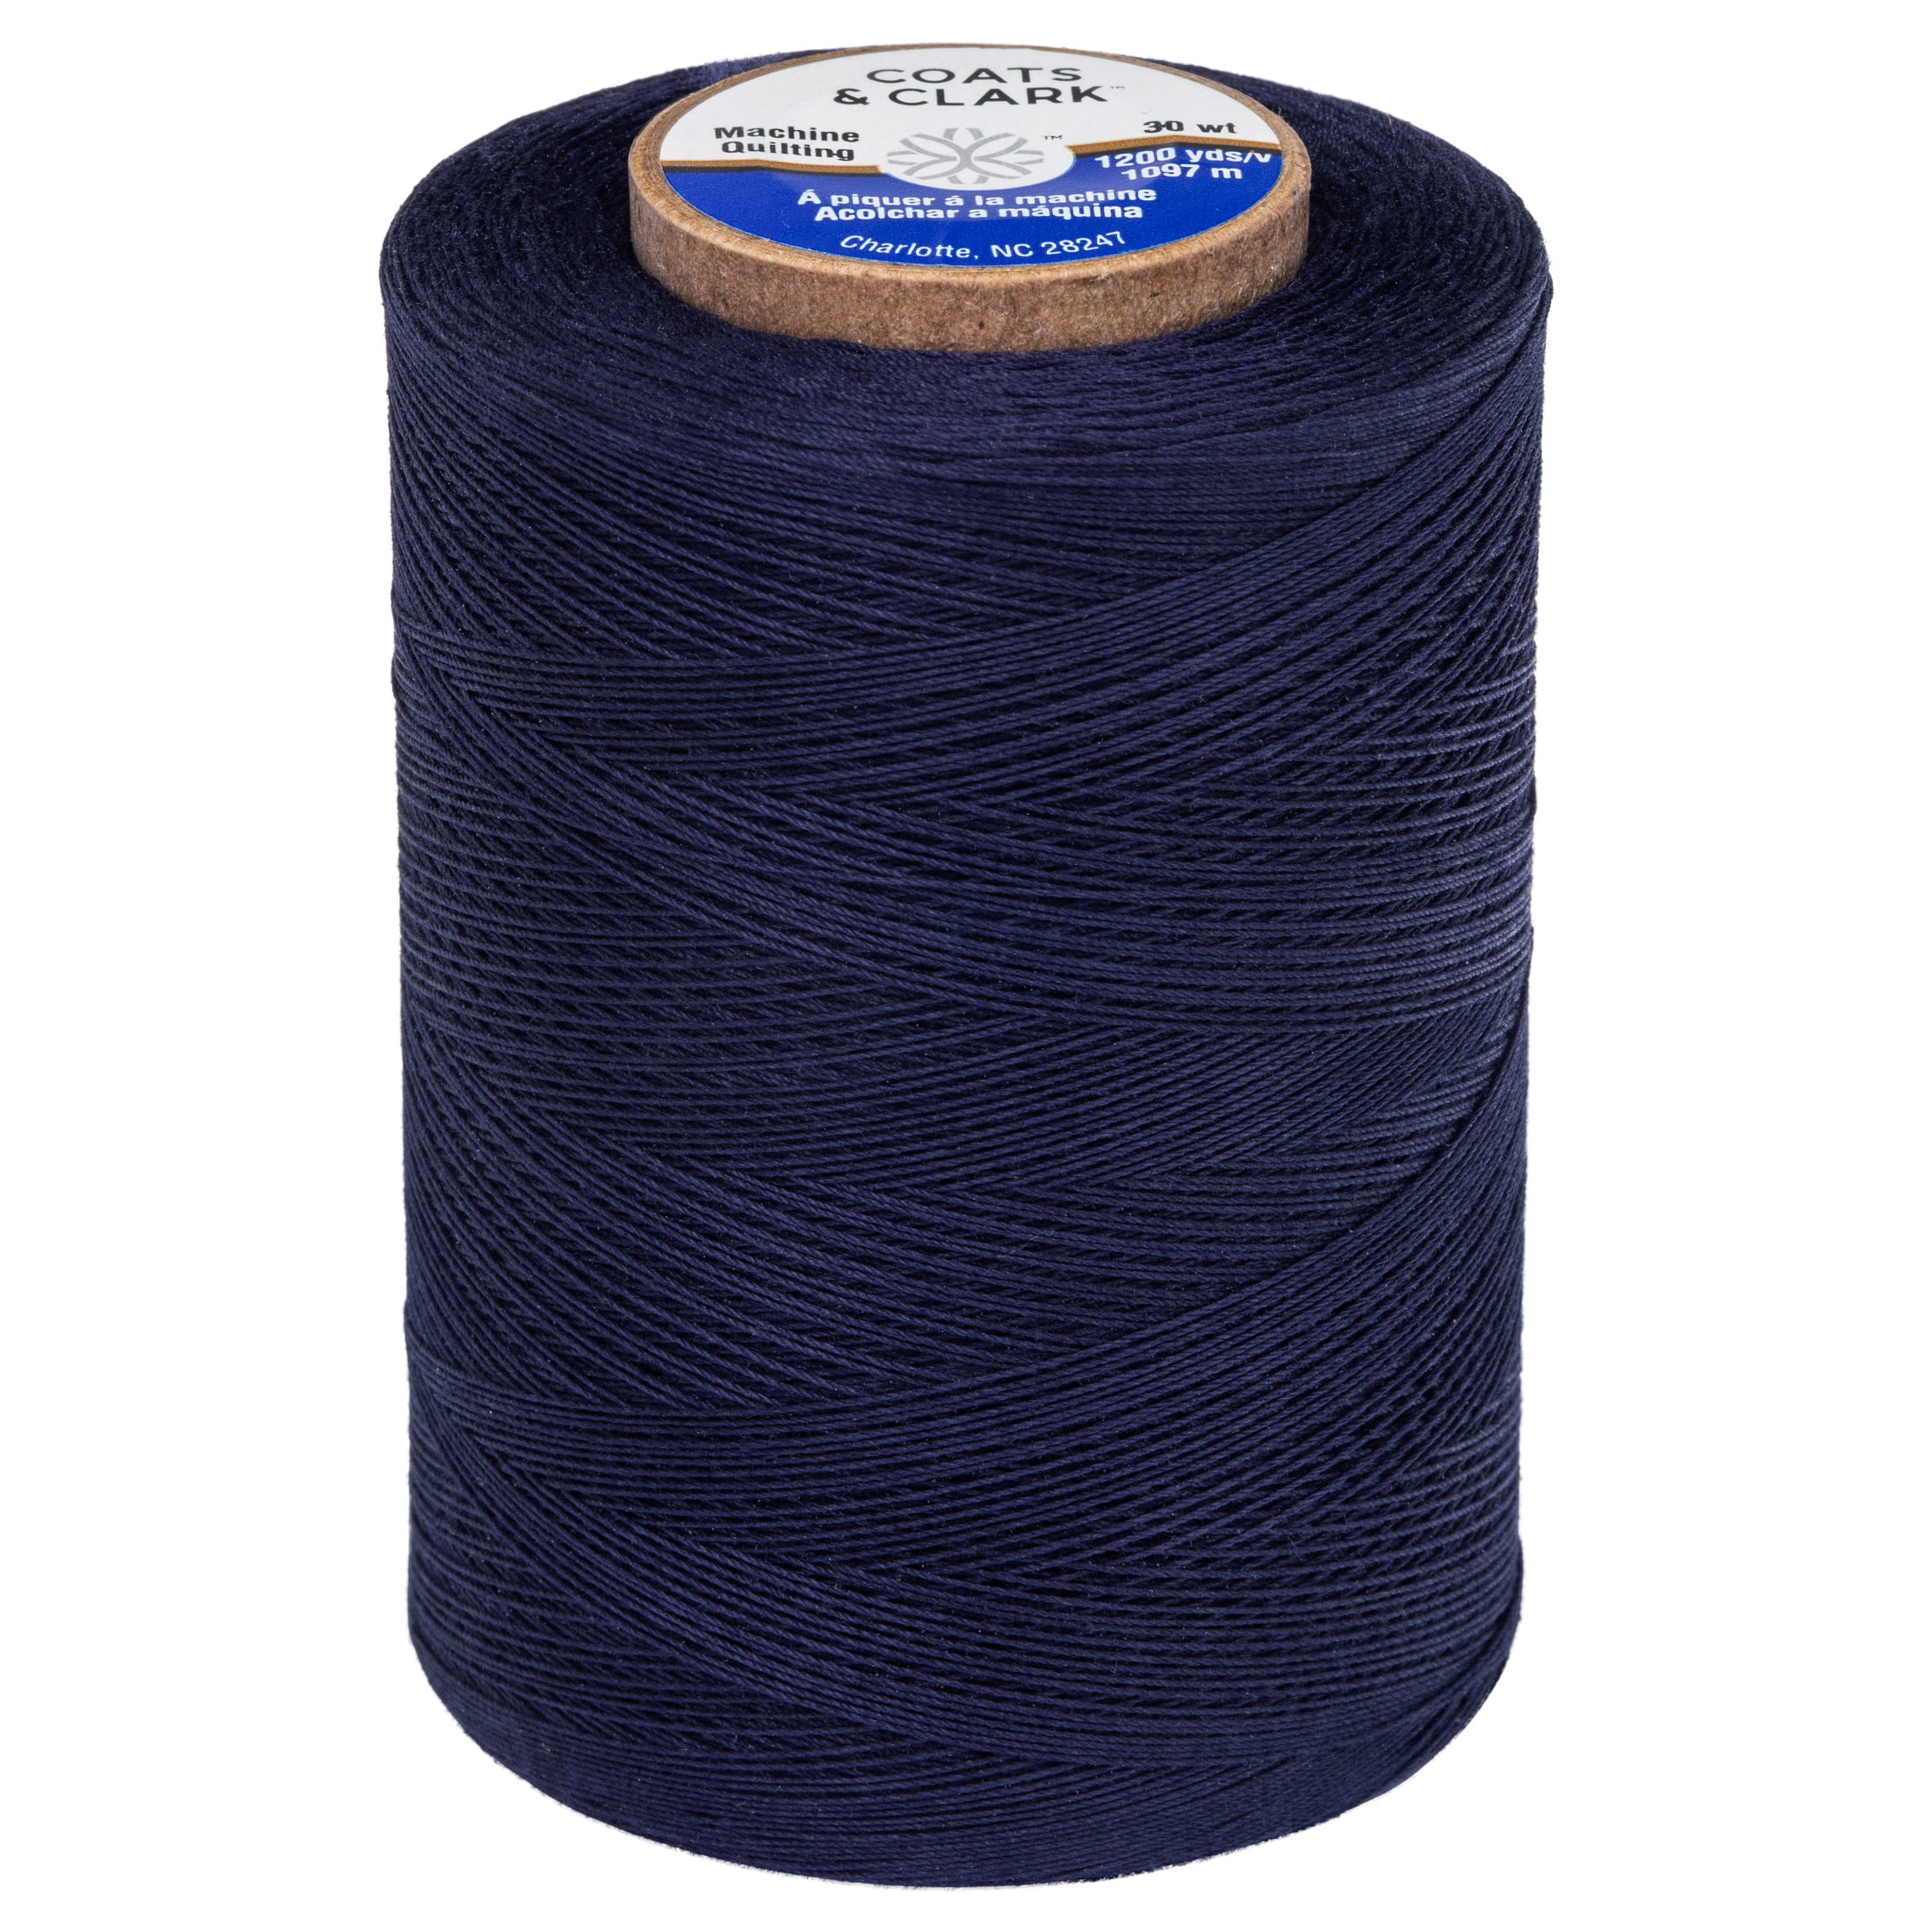 Coats & Clark Machine Quilting Black Cotton Thread, 1200 Yards